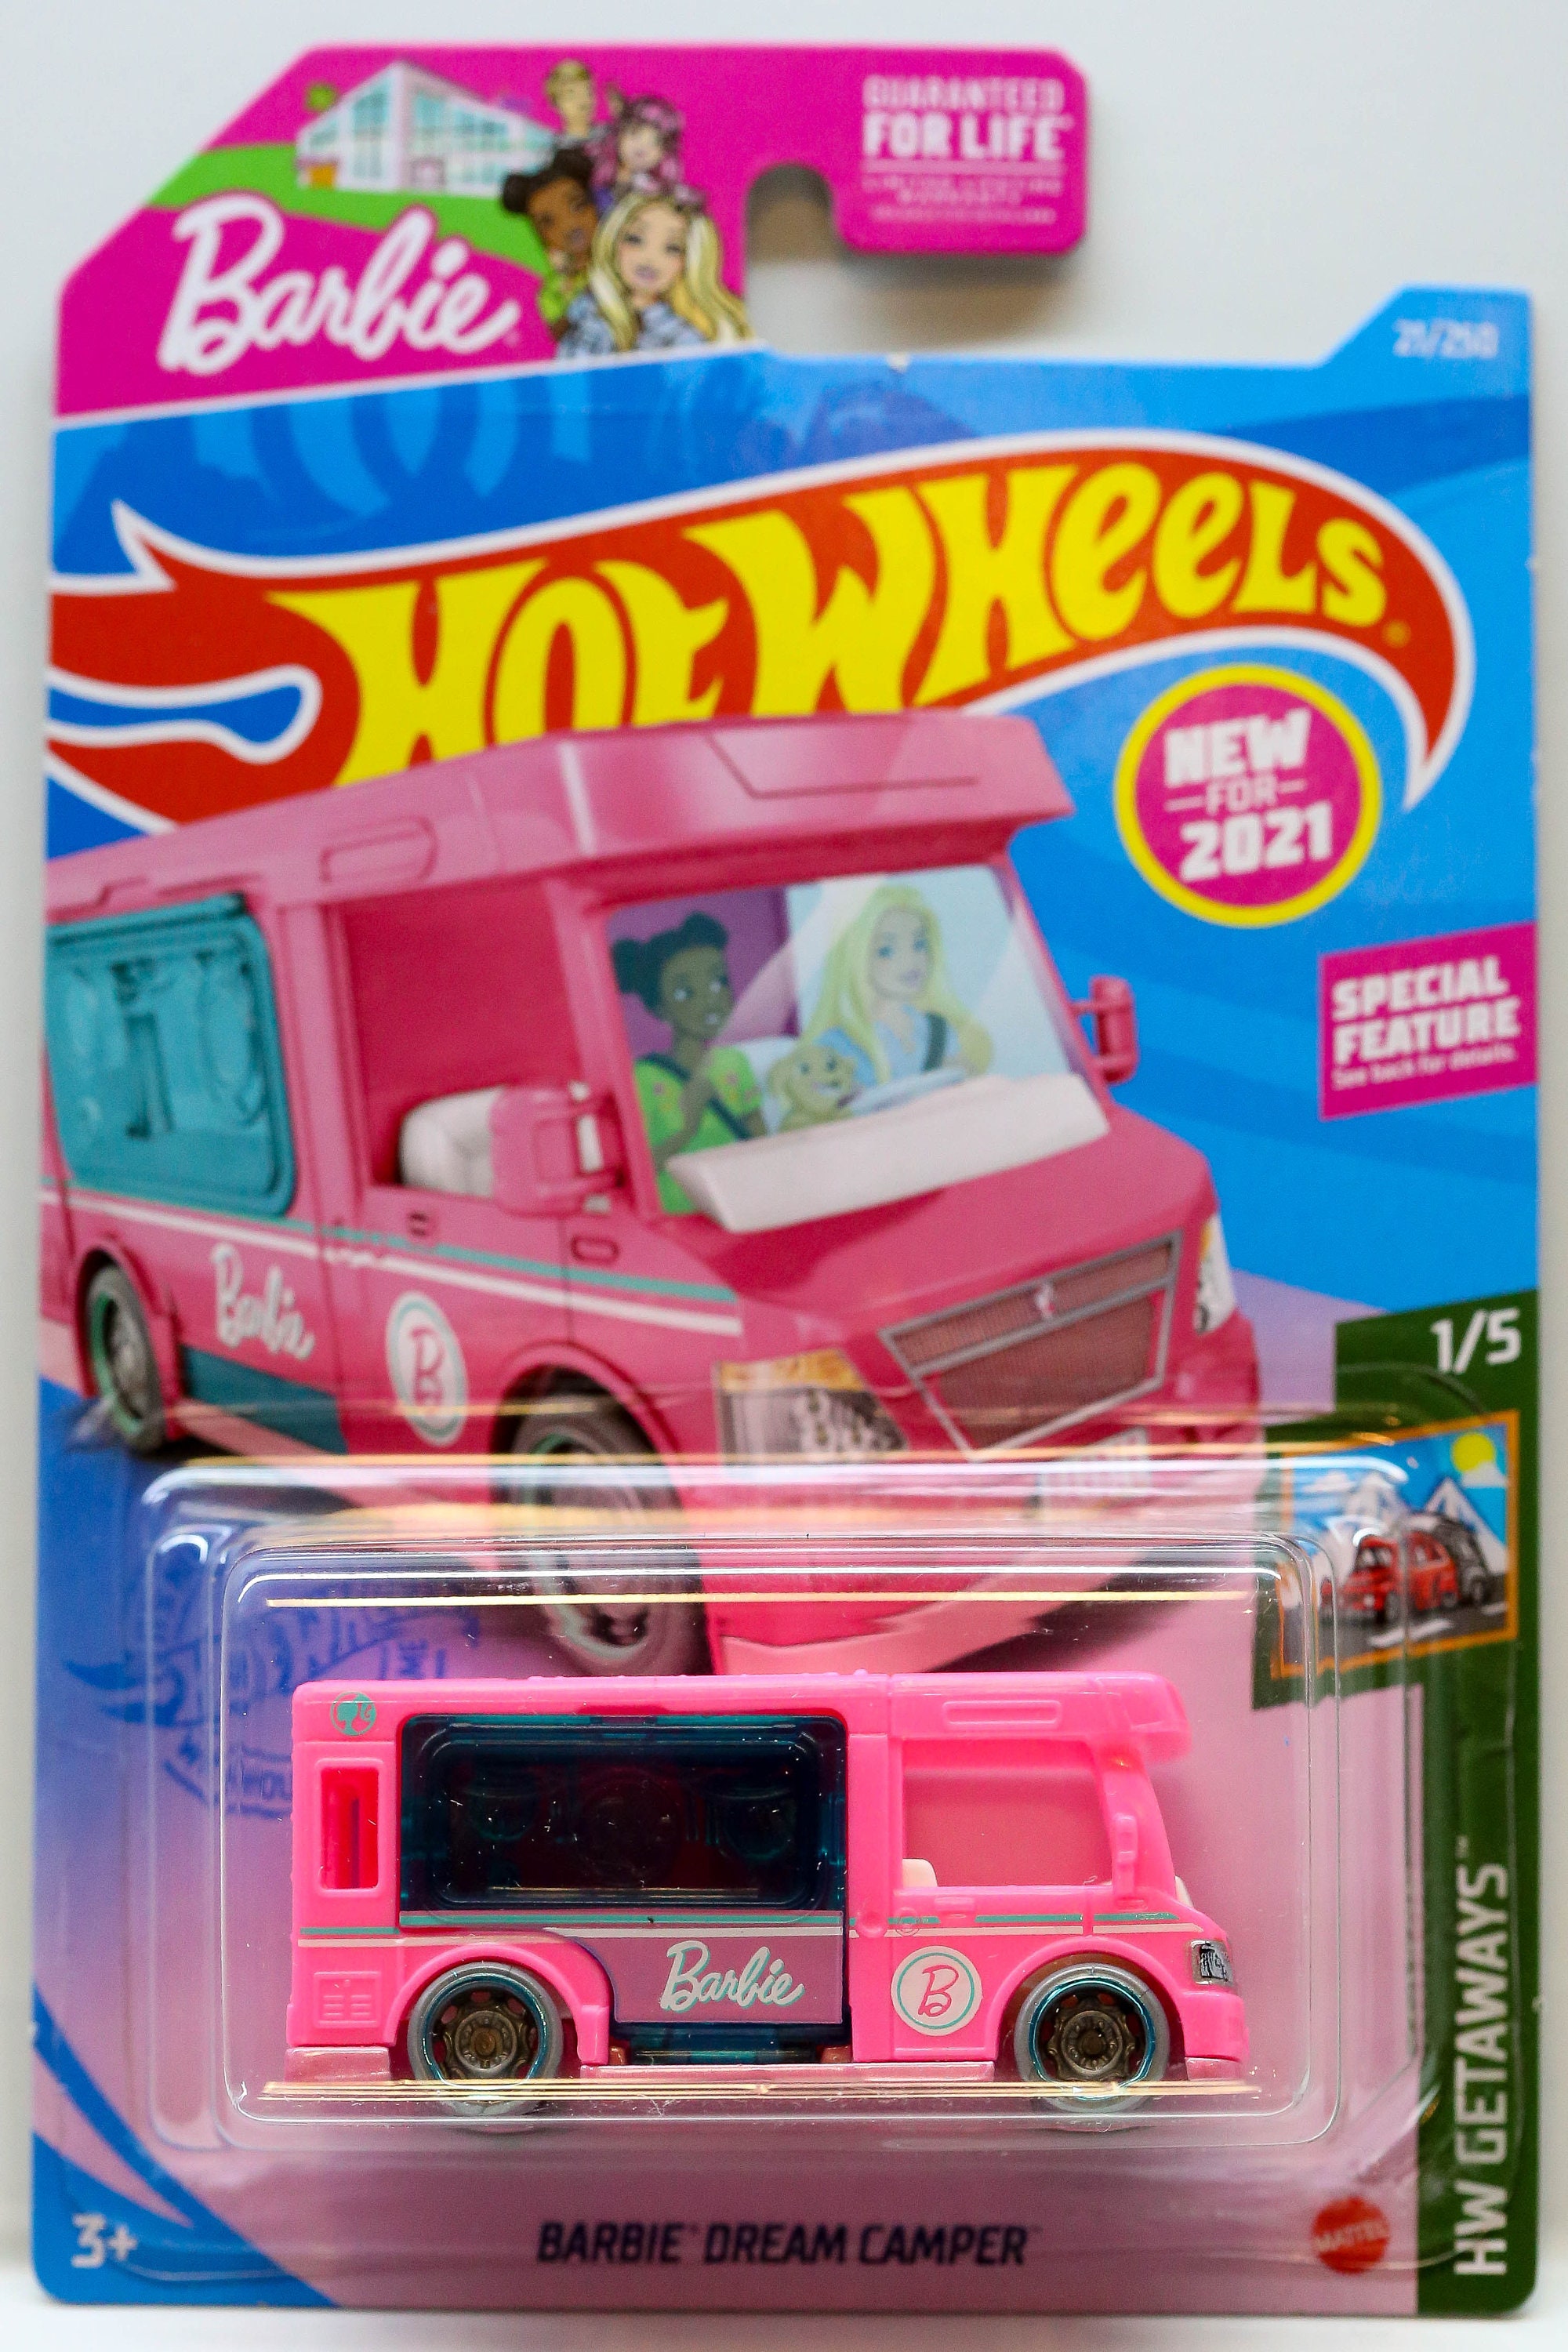 Hot Wheels 2021 Case A "Barbie Dream Camper" HW Getaways 1/5 